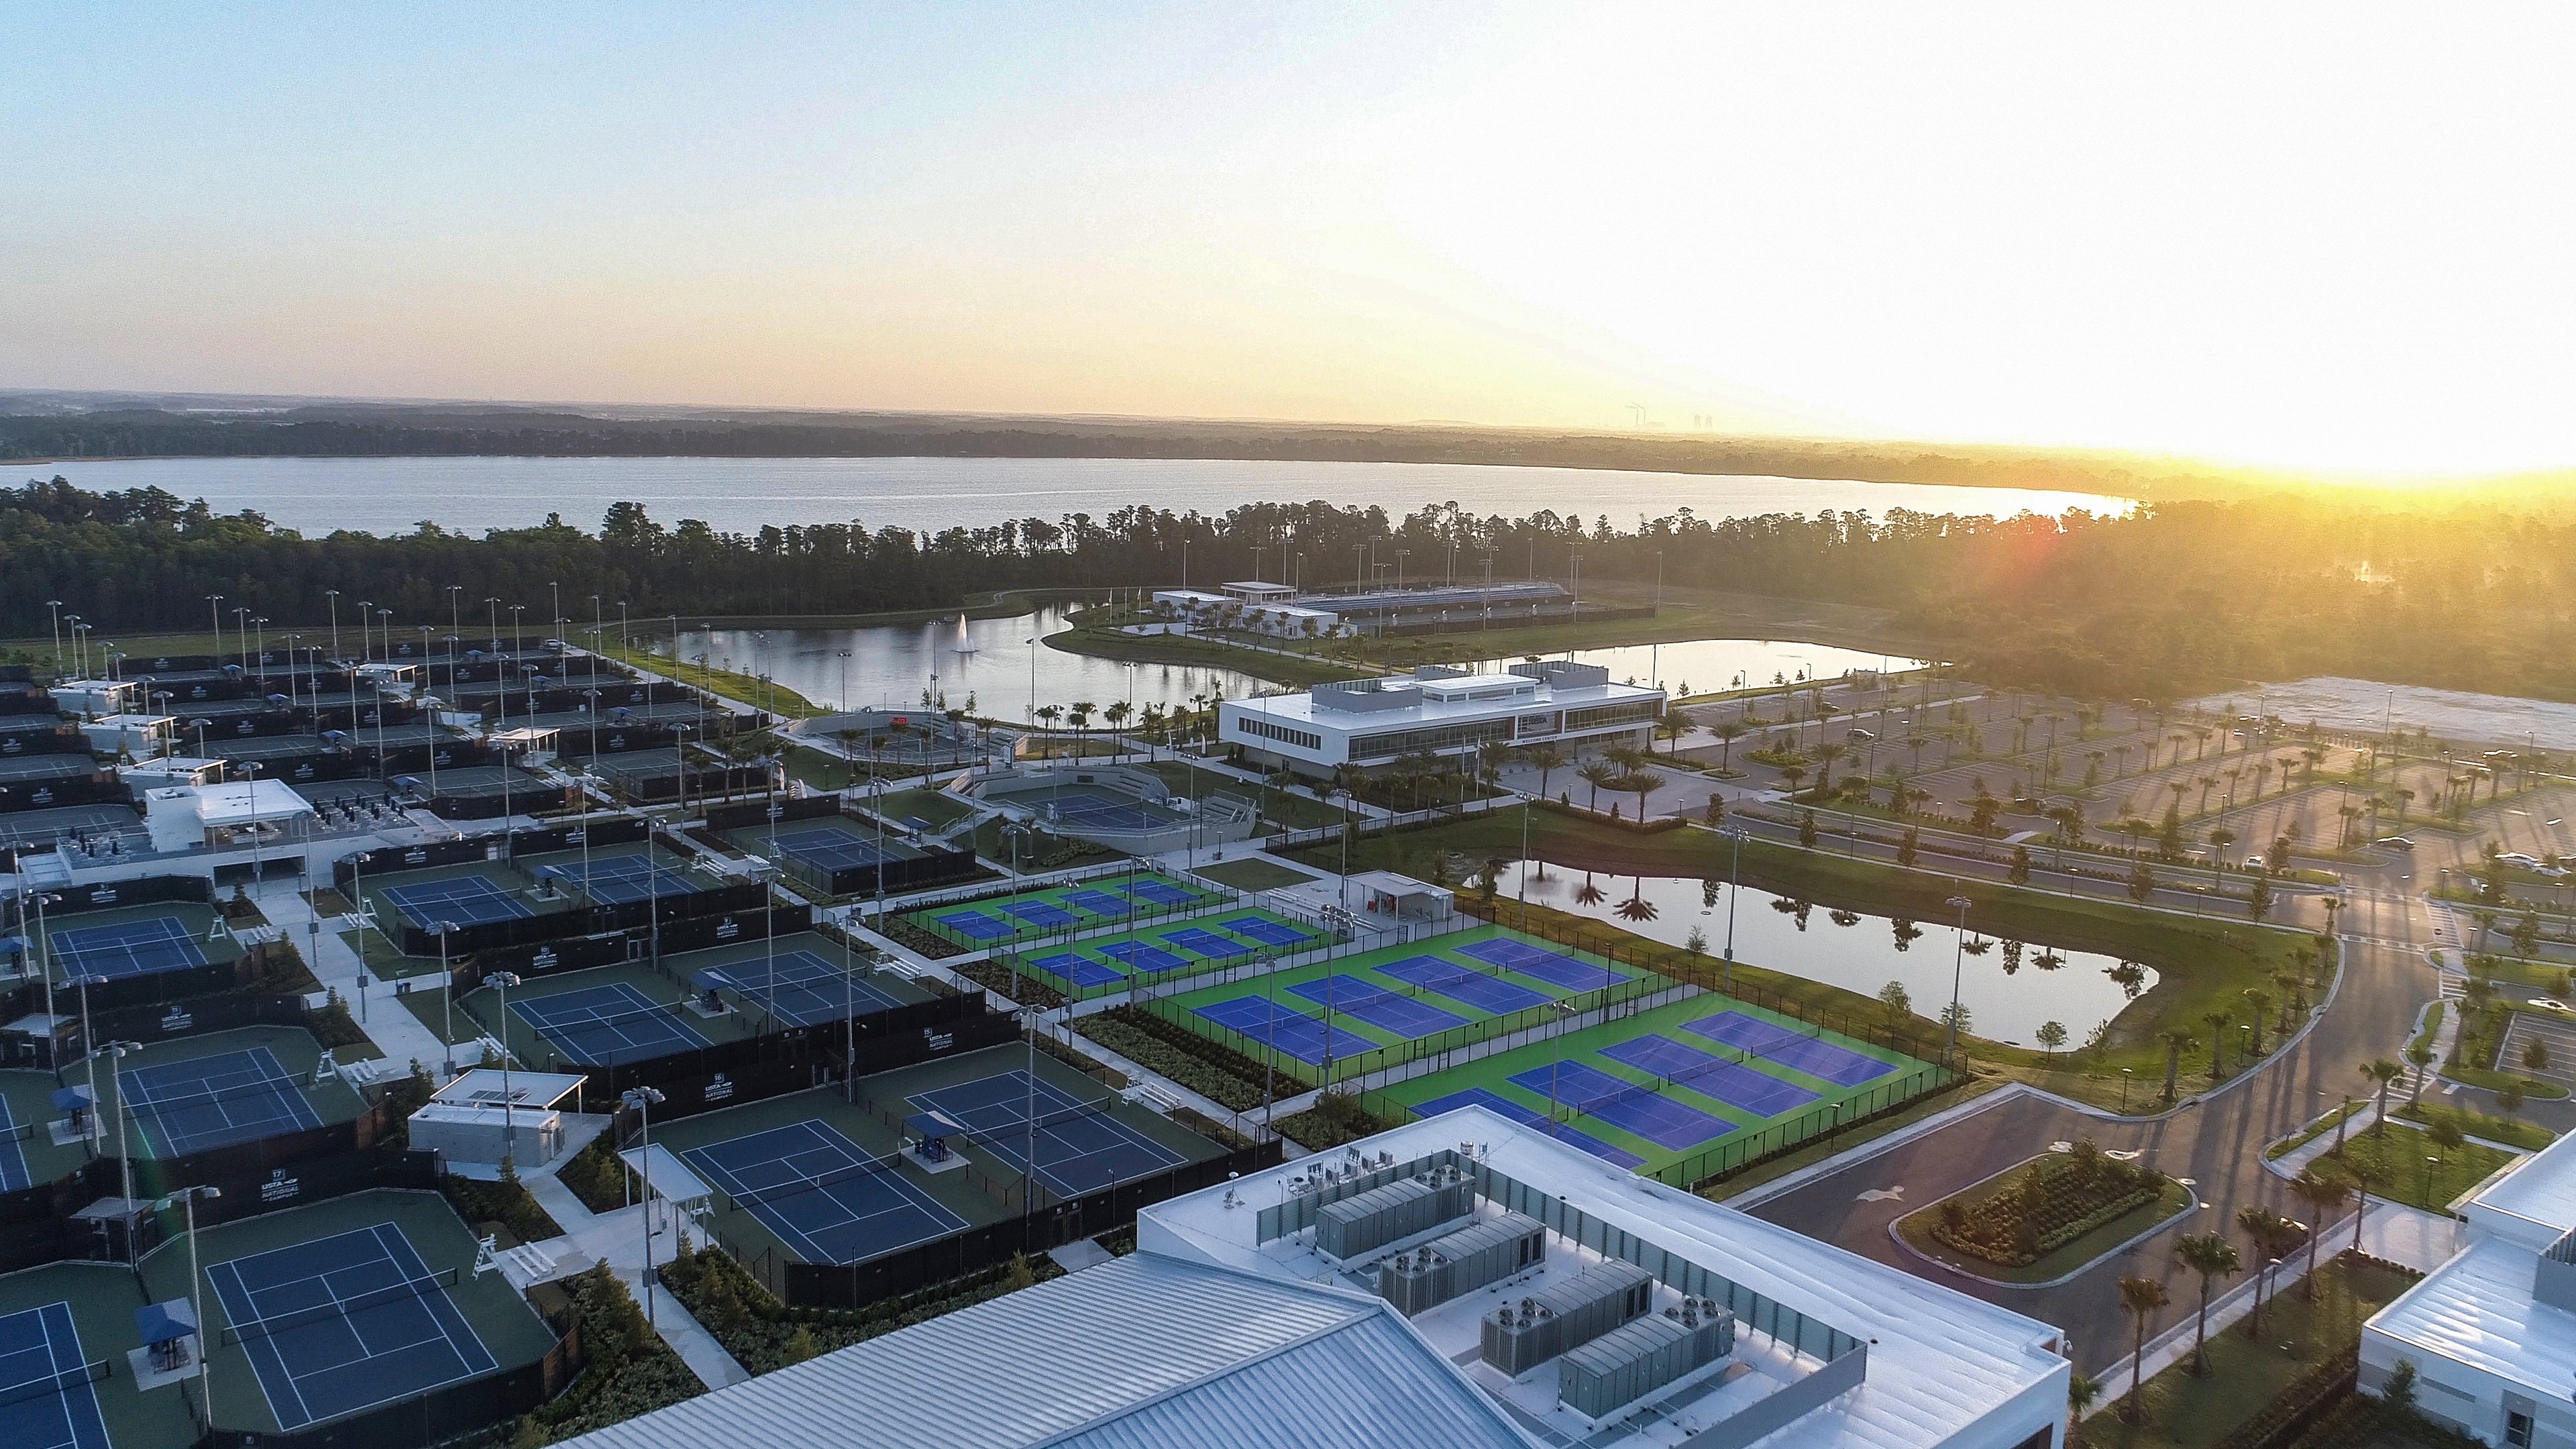 airweave Announces Partnership With United States Tennis Association Player Development